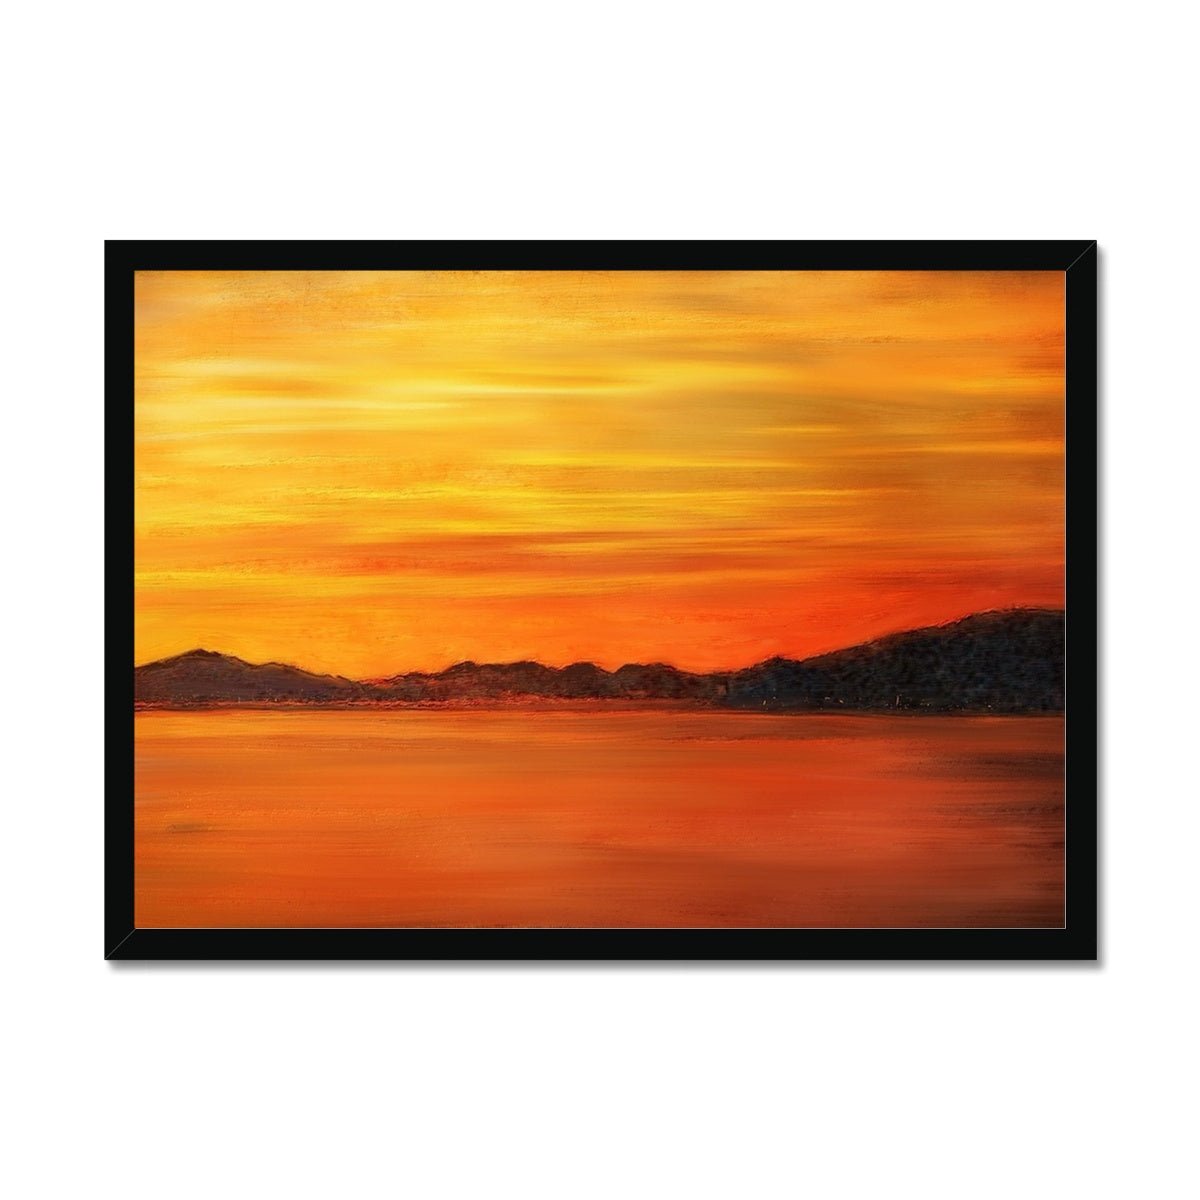 Loch Fyne Sunset Painting | Framed Prints From Scotland-Framed Prints-Scottish Lochs & Mountains Art Gallery-A2 Landscape-Black Frame-Paintings, Prints, Homeware, Art Gifts From Scotland By Scottish Artist Kevin Hunter